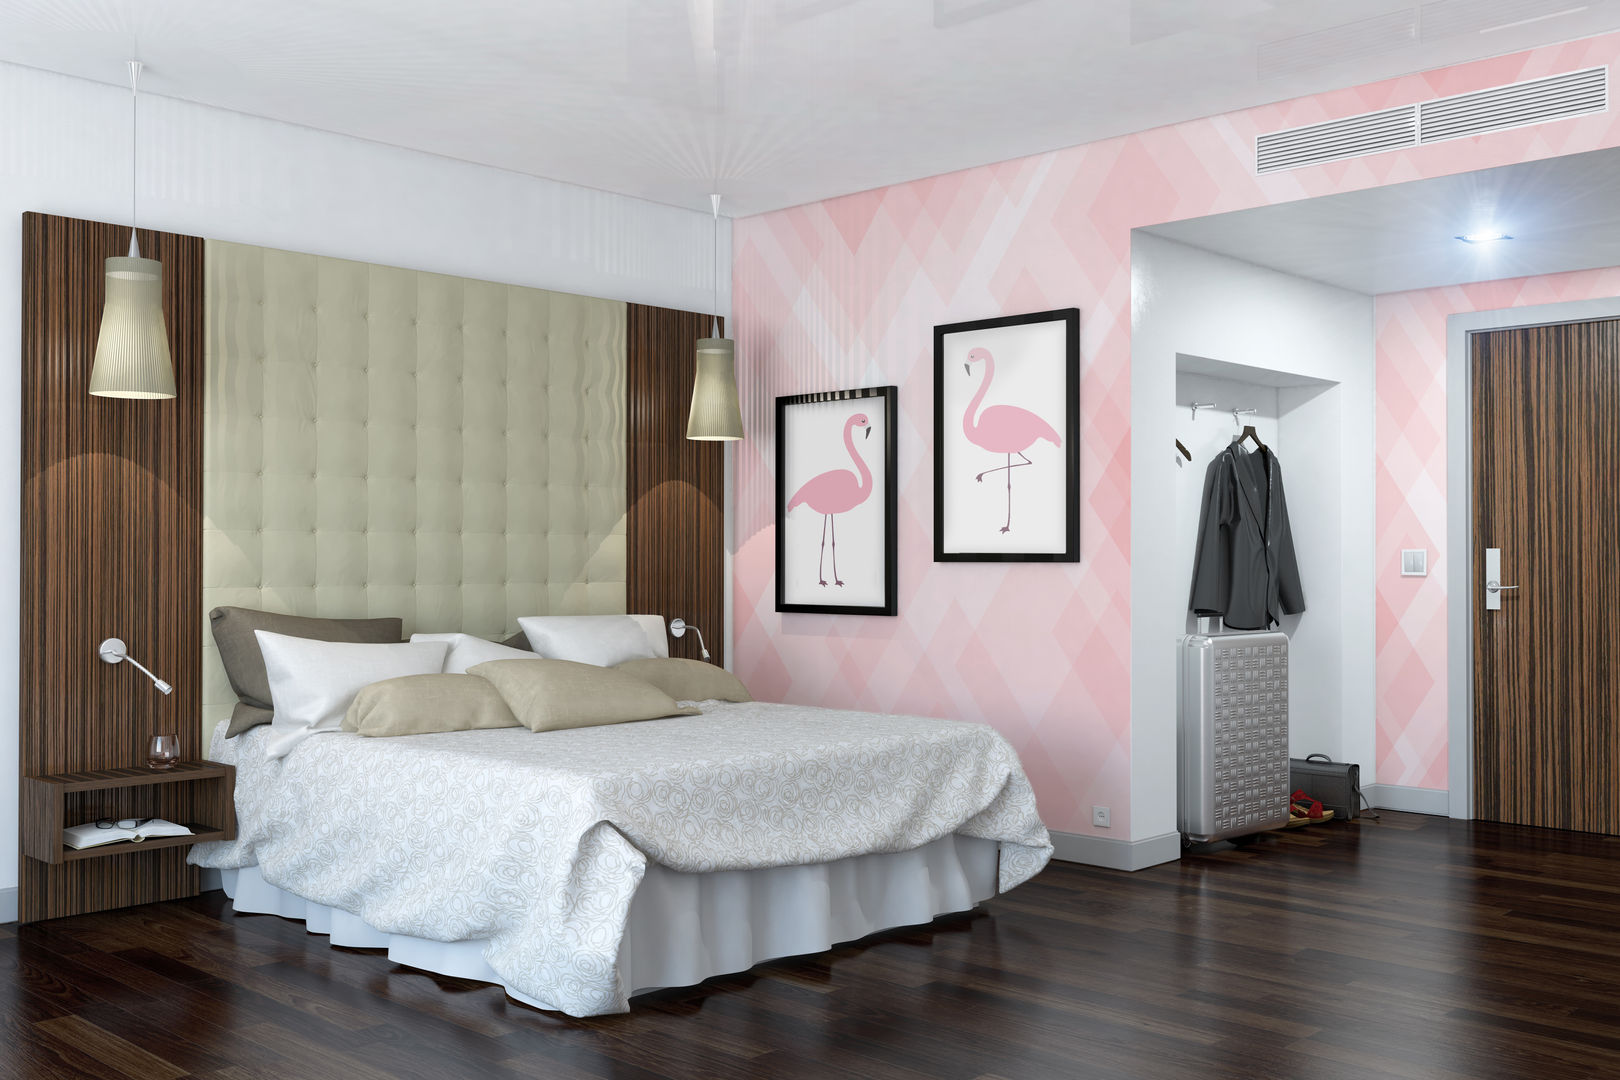 Flamingo Pixers Dormitorios de estilo moderno wall mural,wallpaper,wall decal